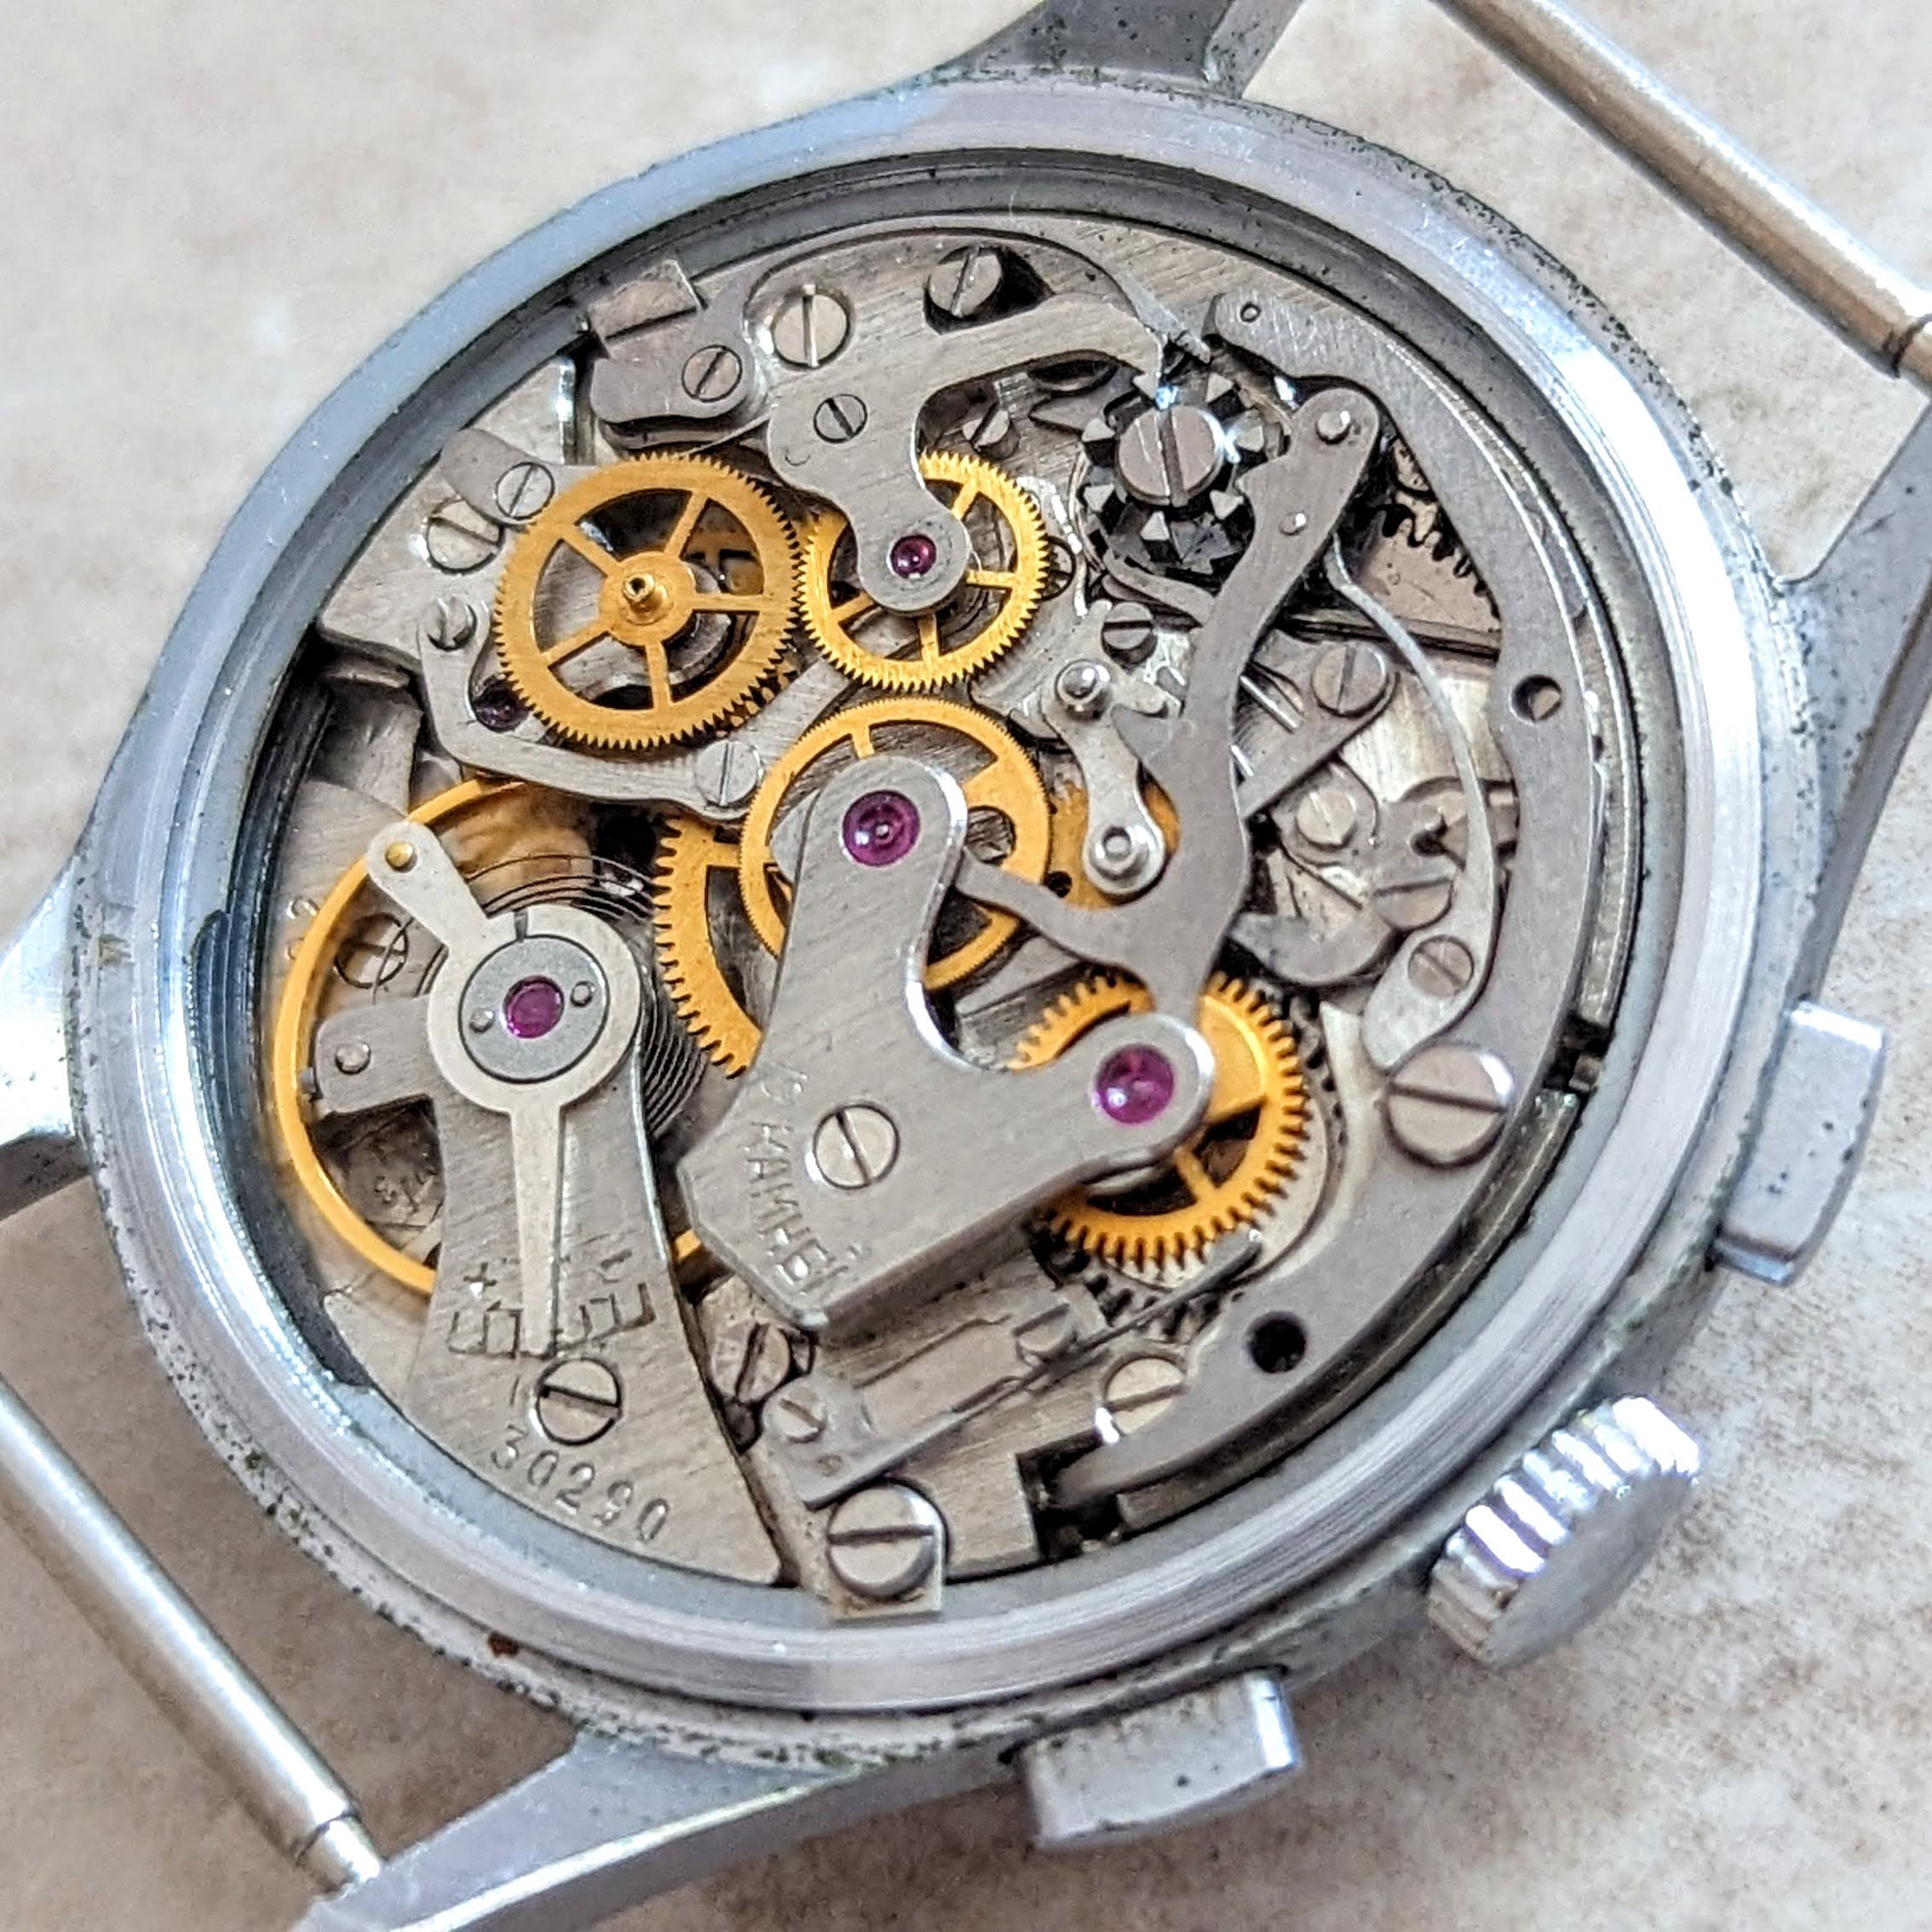 POLJOT Chronograph Wristwatch 19 Jewels Made in U.S.S.R. Vintage Watch